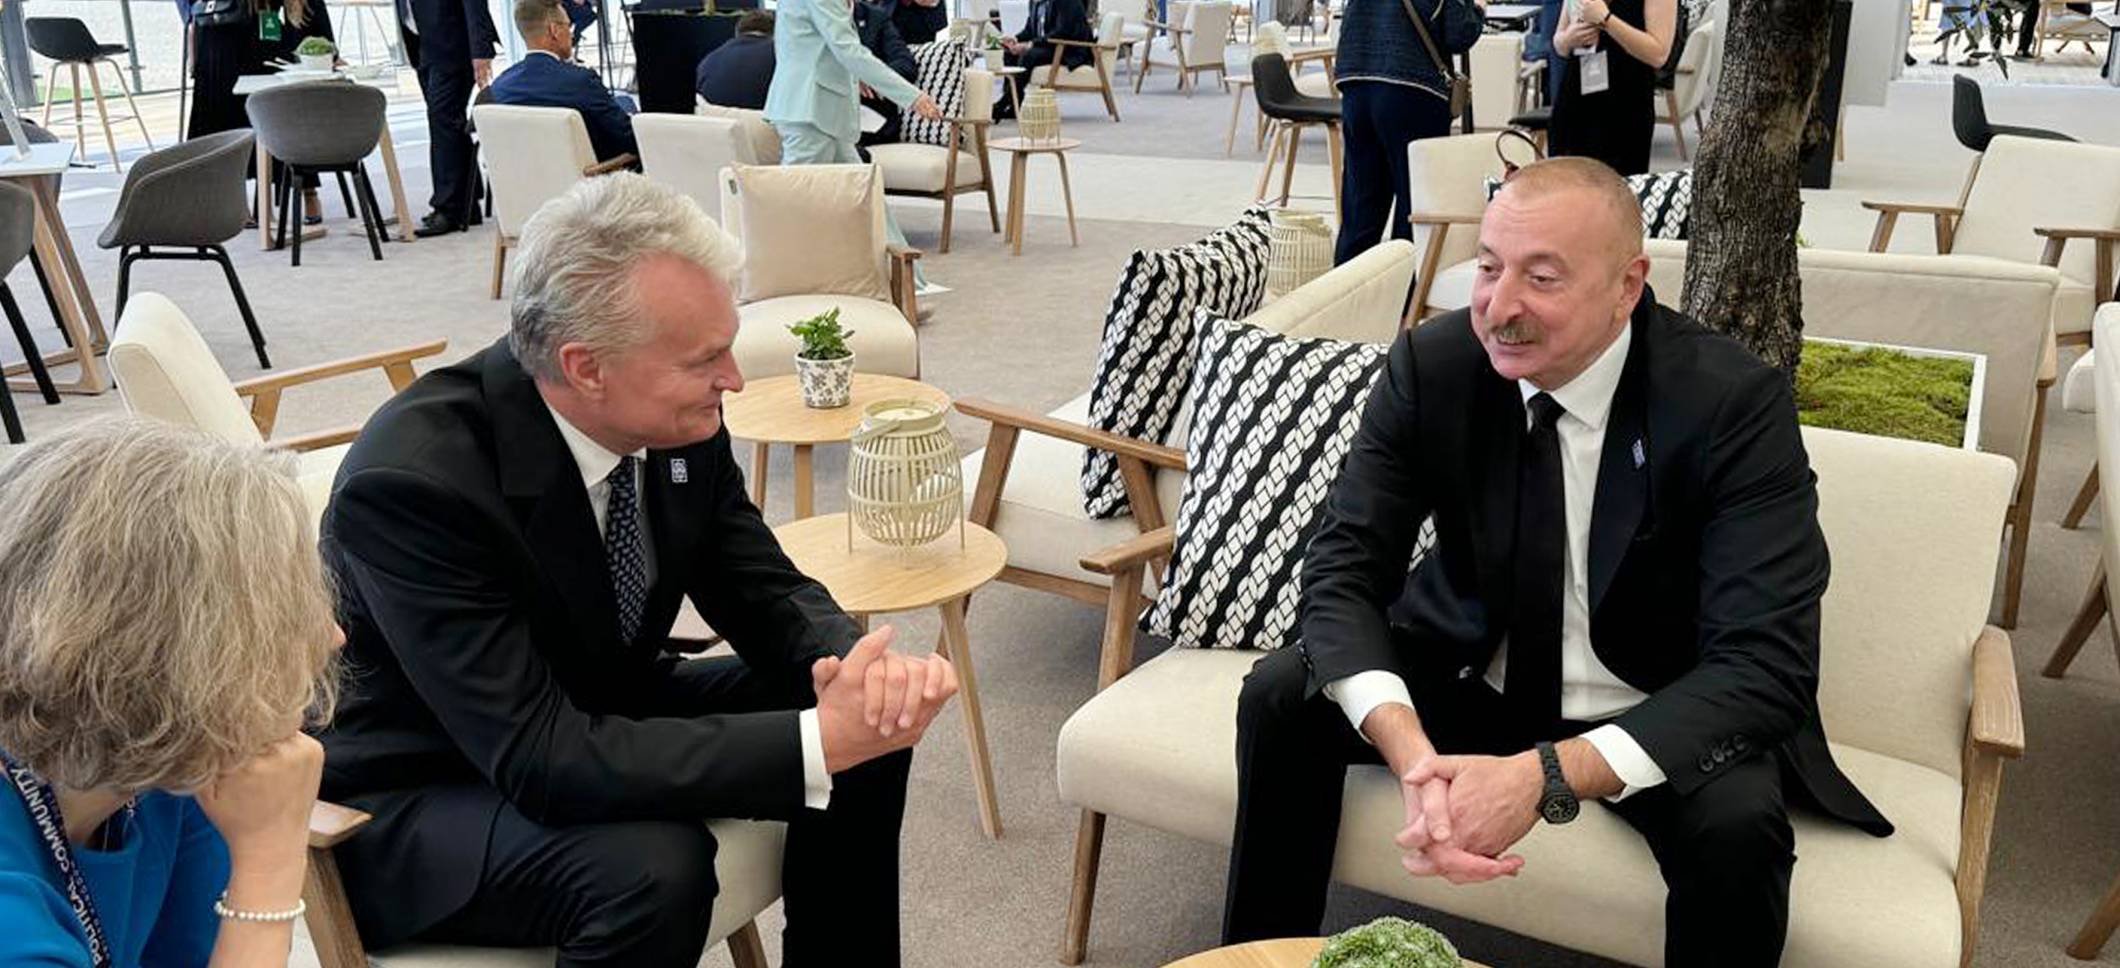 Ilham Aliyev met with President of Lithuania Gitanas Nausėda in Oxford